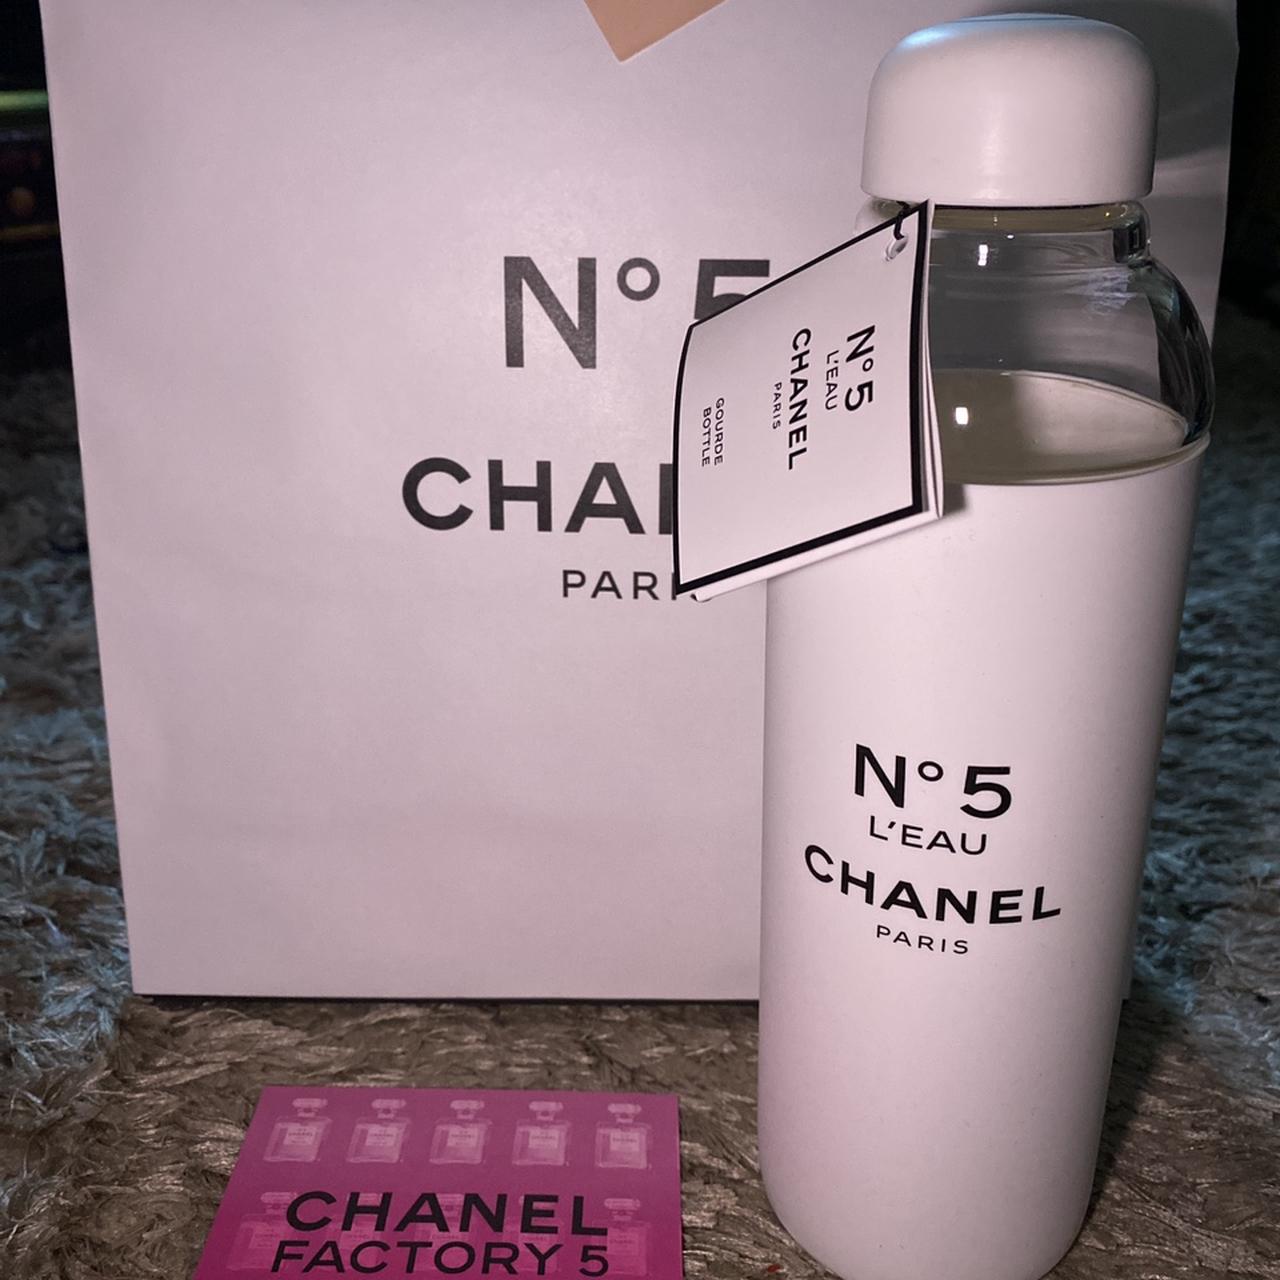 Chanel Water Bottle Chanel factory Can provide - Depop